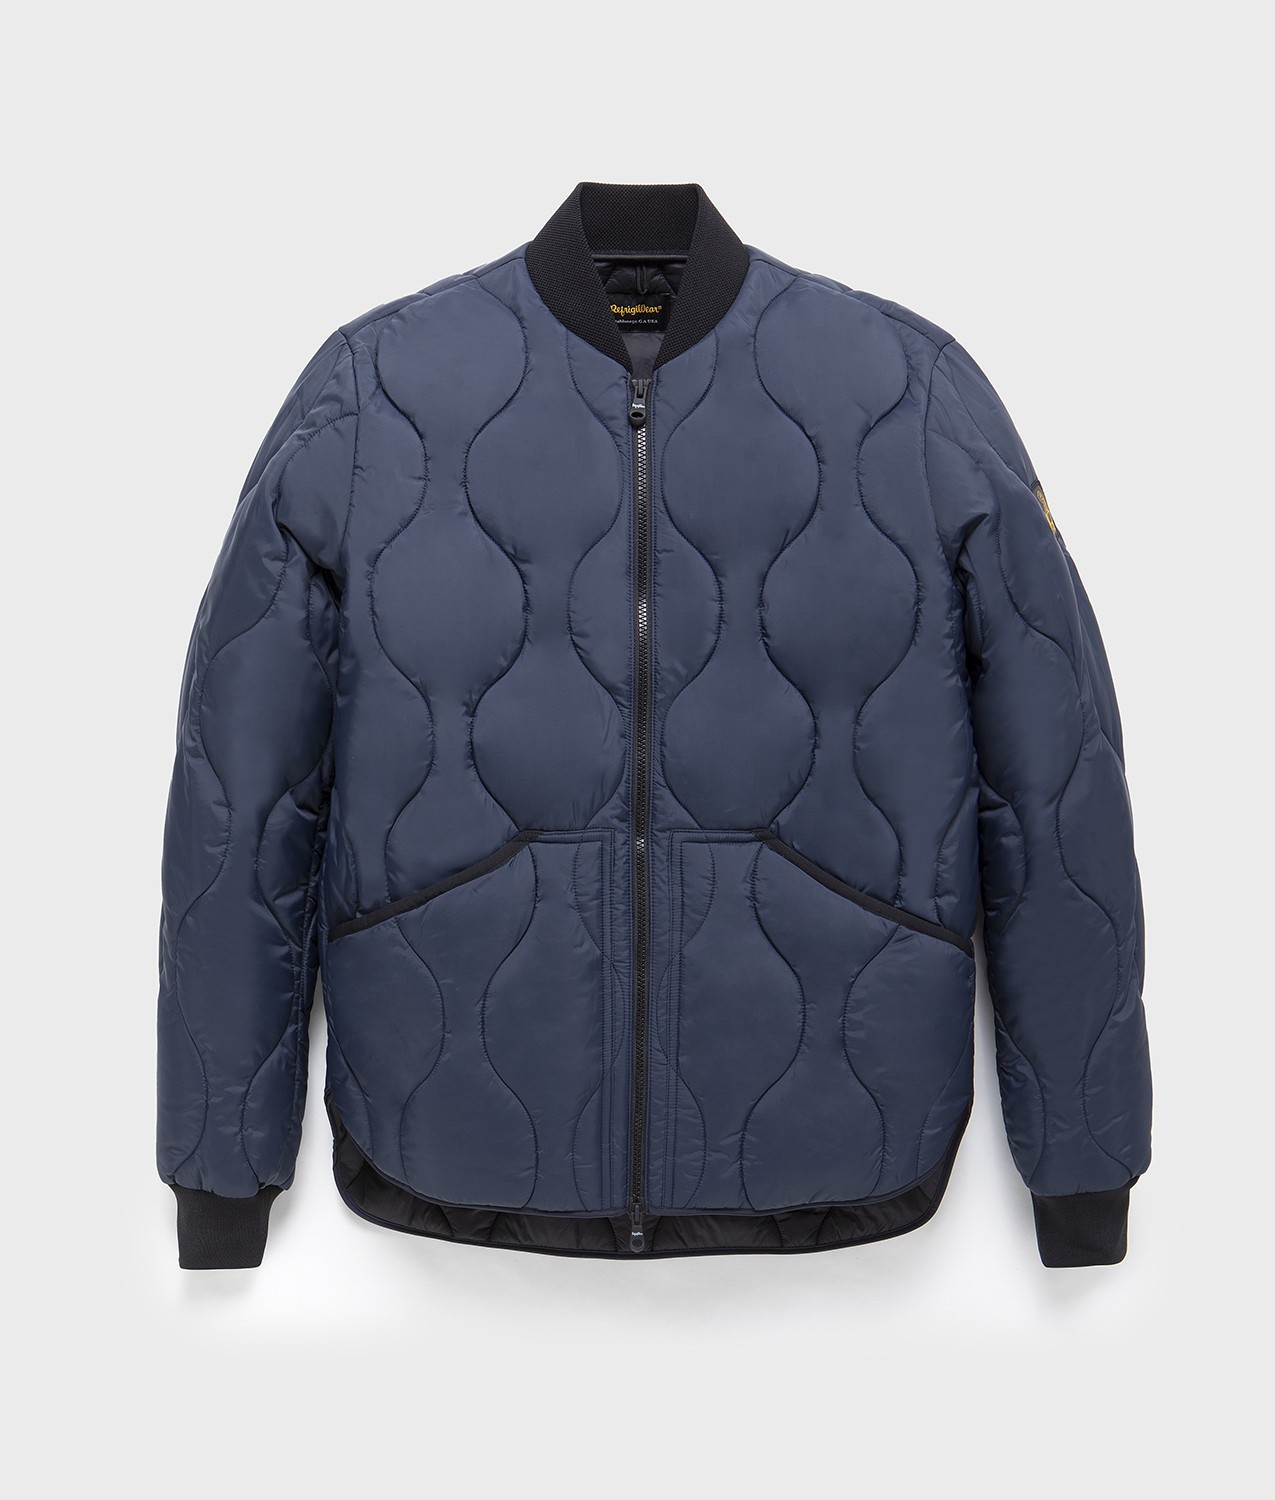 Refrigiwear Jordan jacket    G02550 NY0181